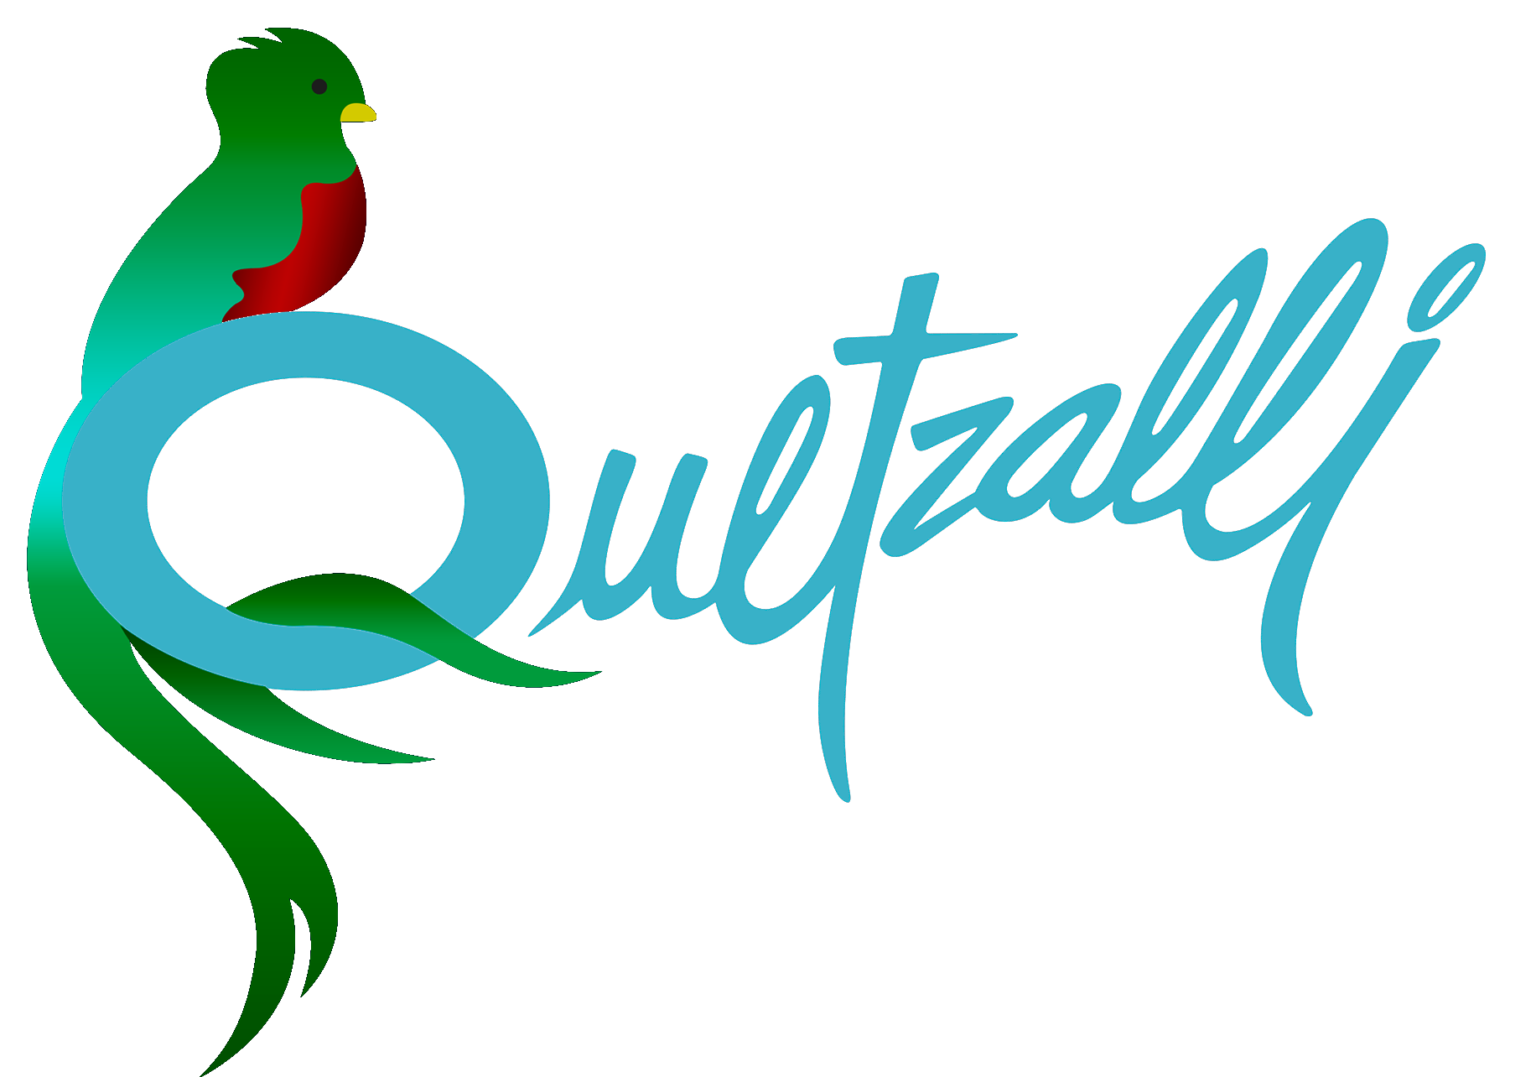 Club Deportivo Quetzalli